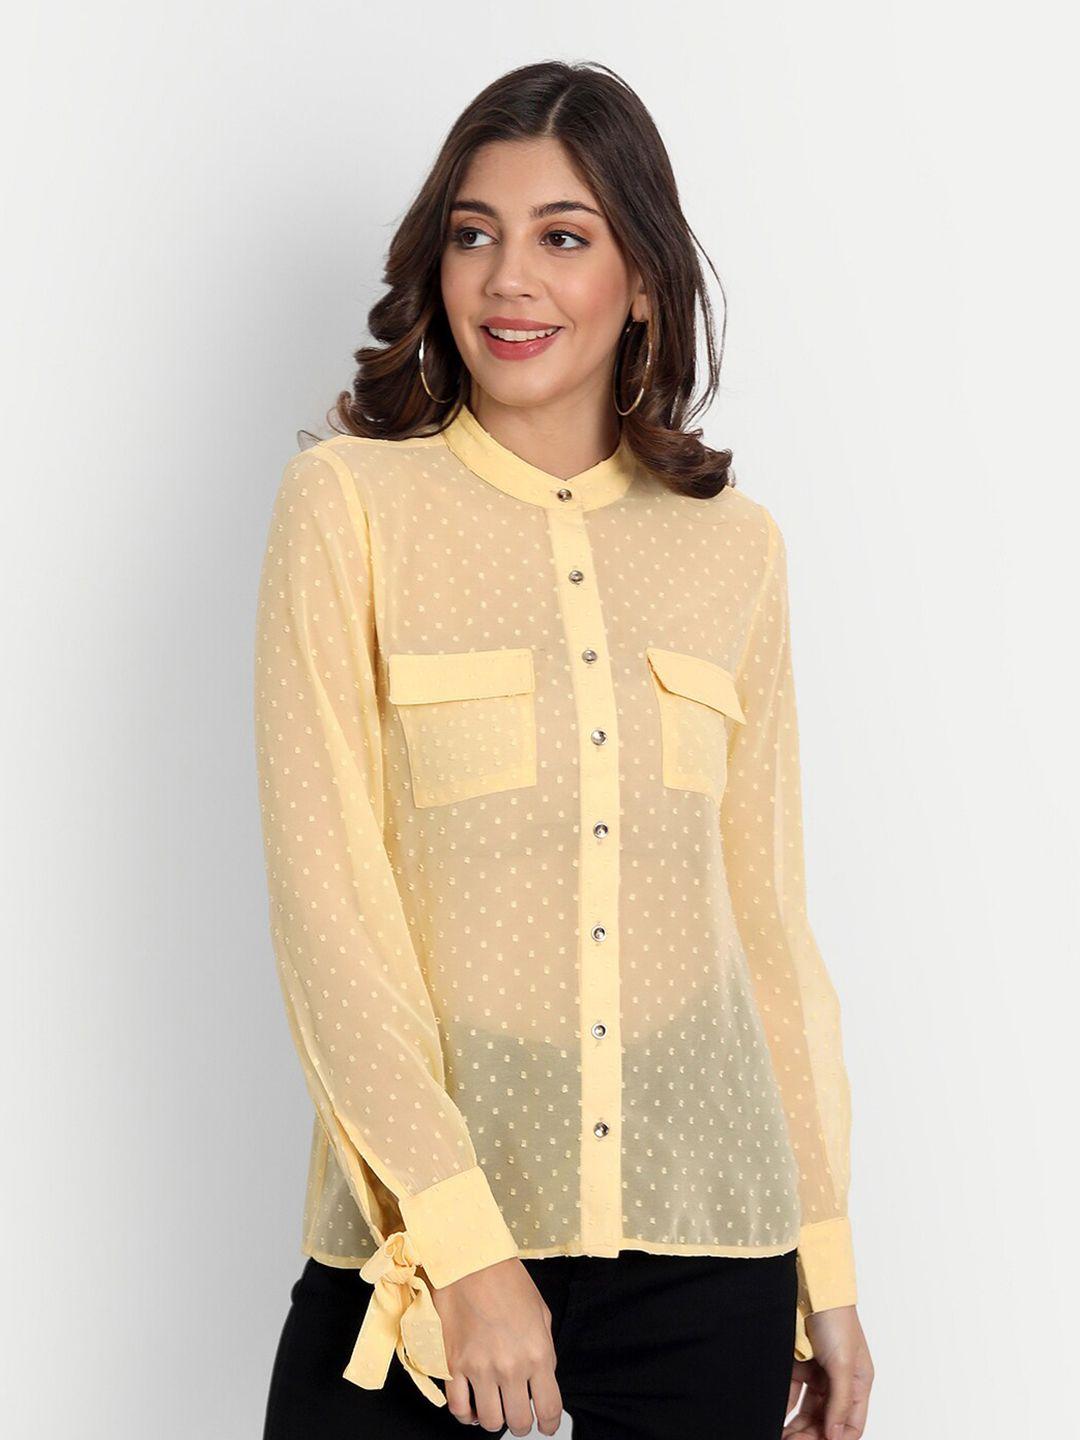 essque yellow mandarin collar georgette shirt style top